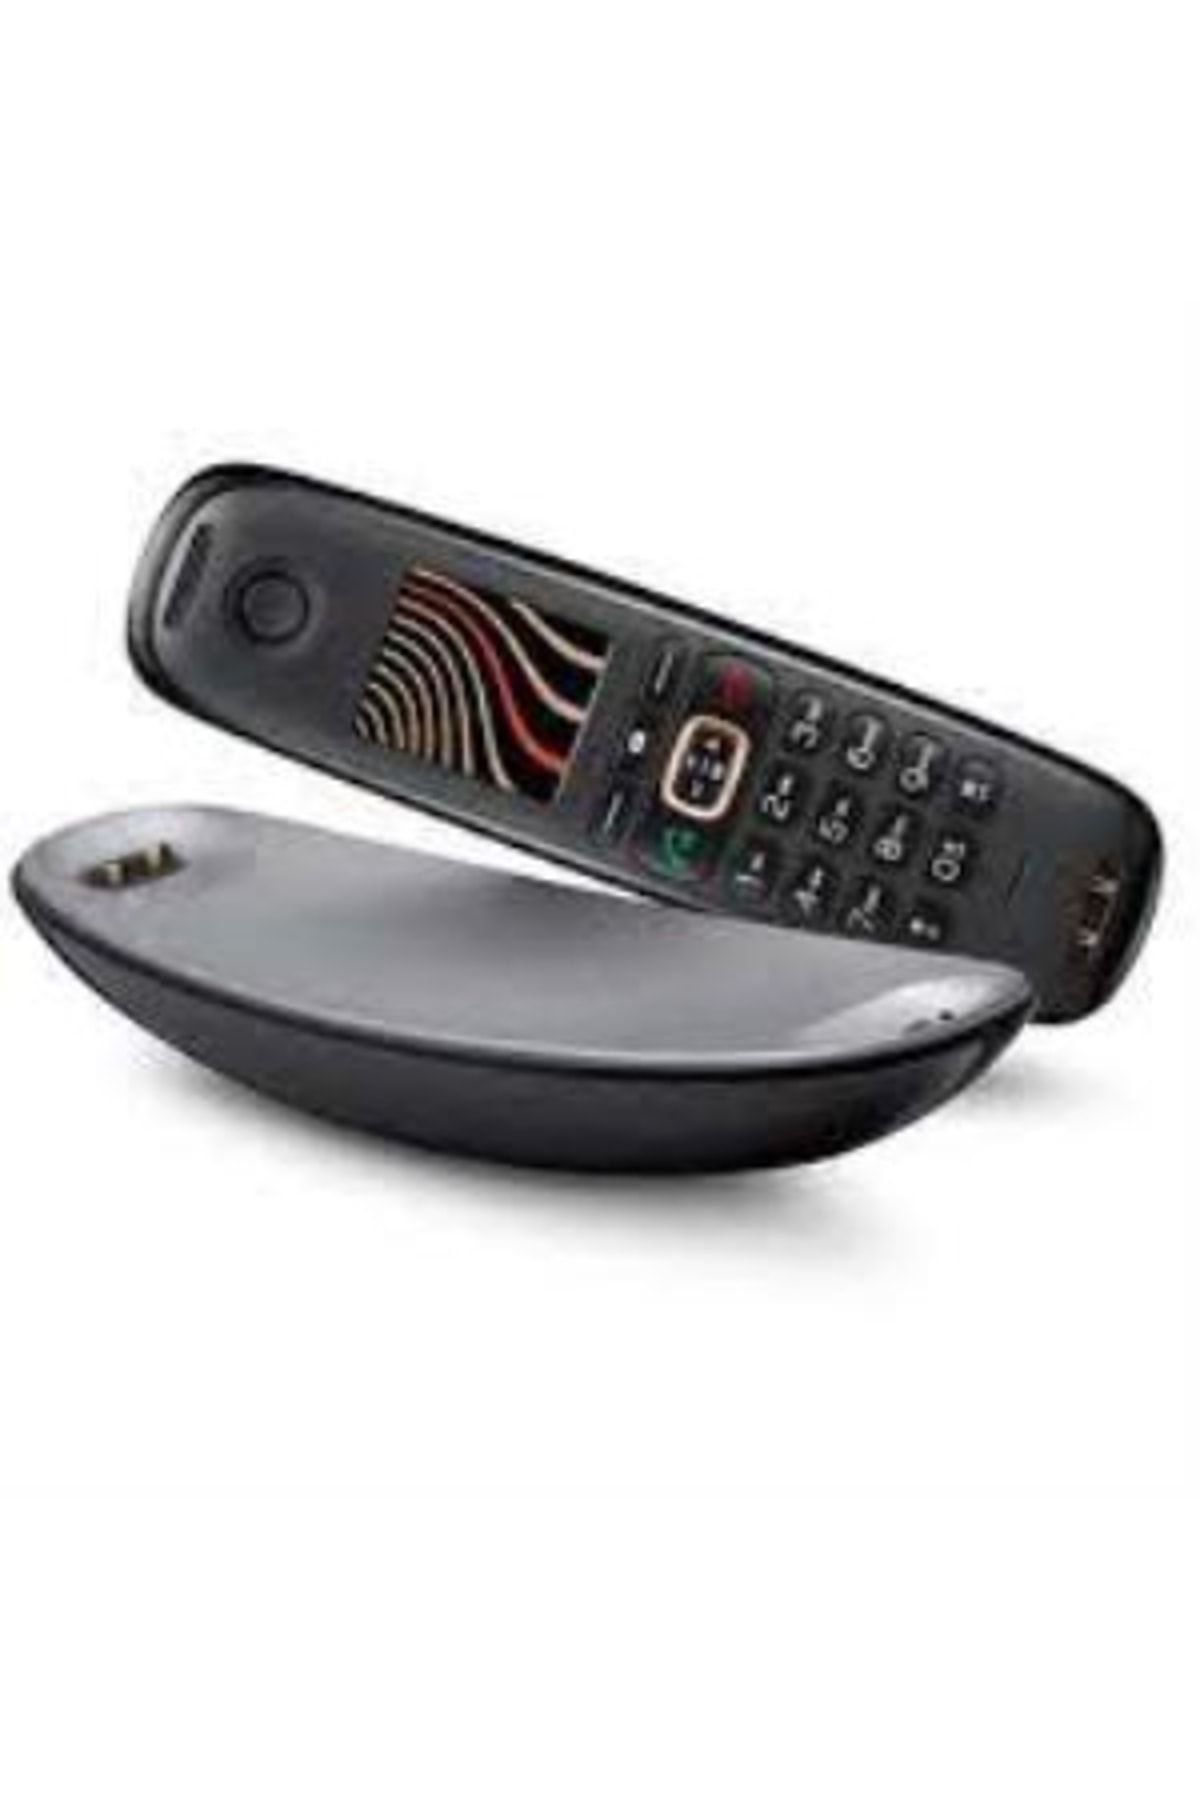 Gigaset Cl750 Sculpture Siyah Telsiz Dect Telefon Işıklı Ekran Telsiz Telefon